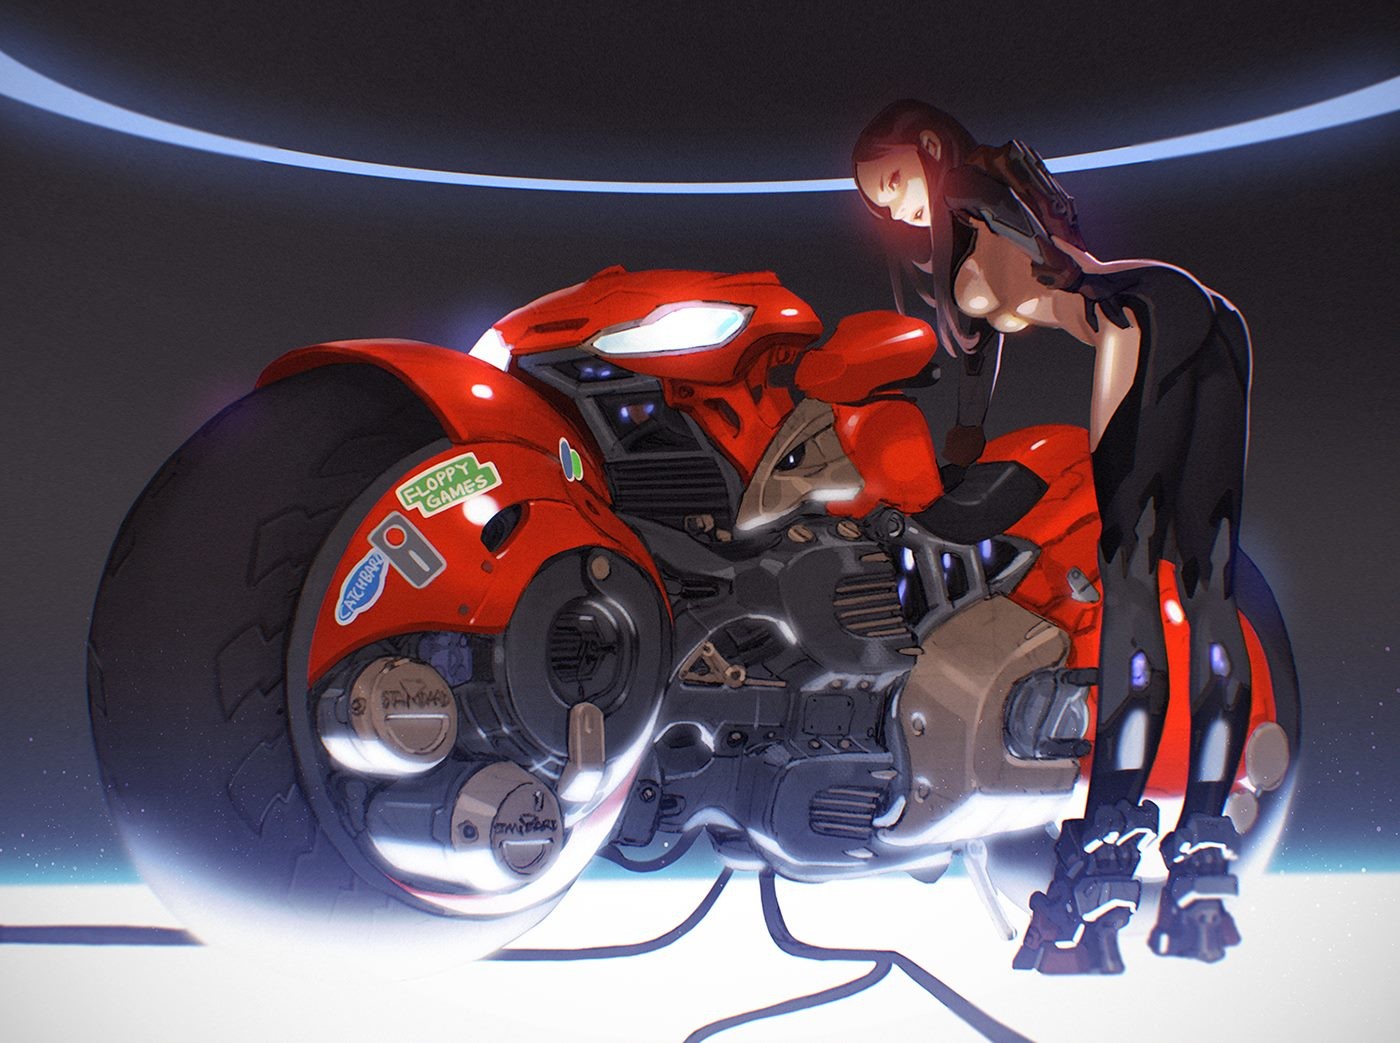 Red Motorbike by Sunkist Lee